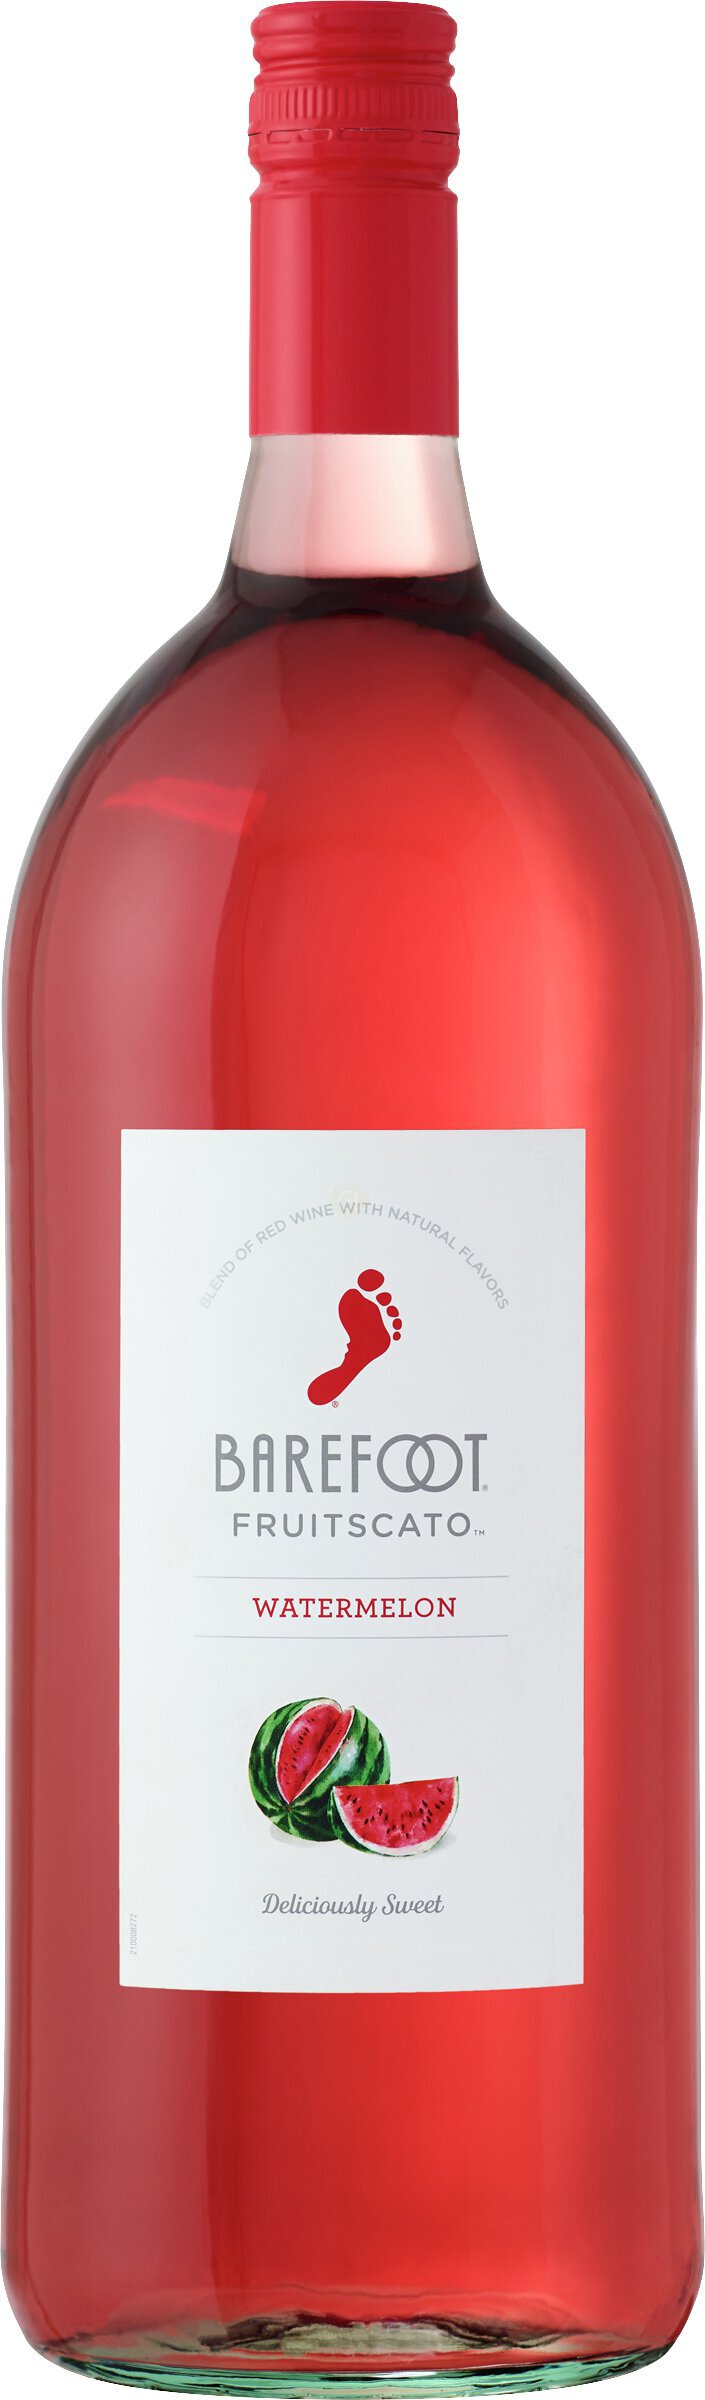 Barefoot Fruitscato Watermelon 750 ml